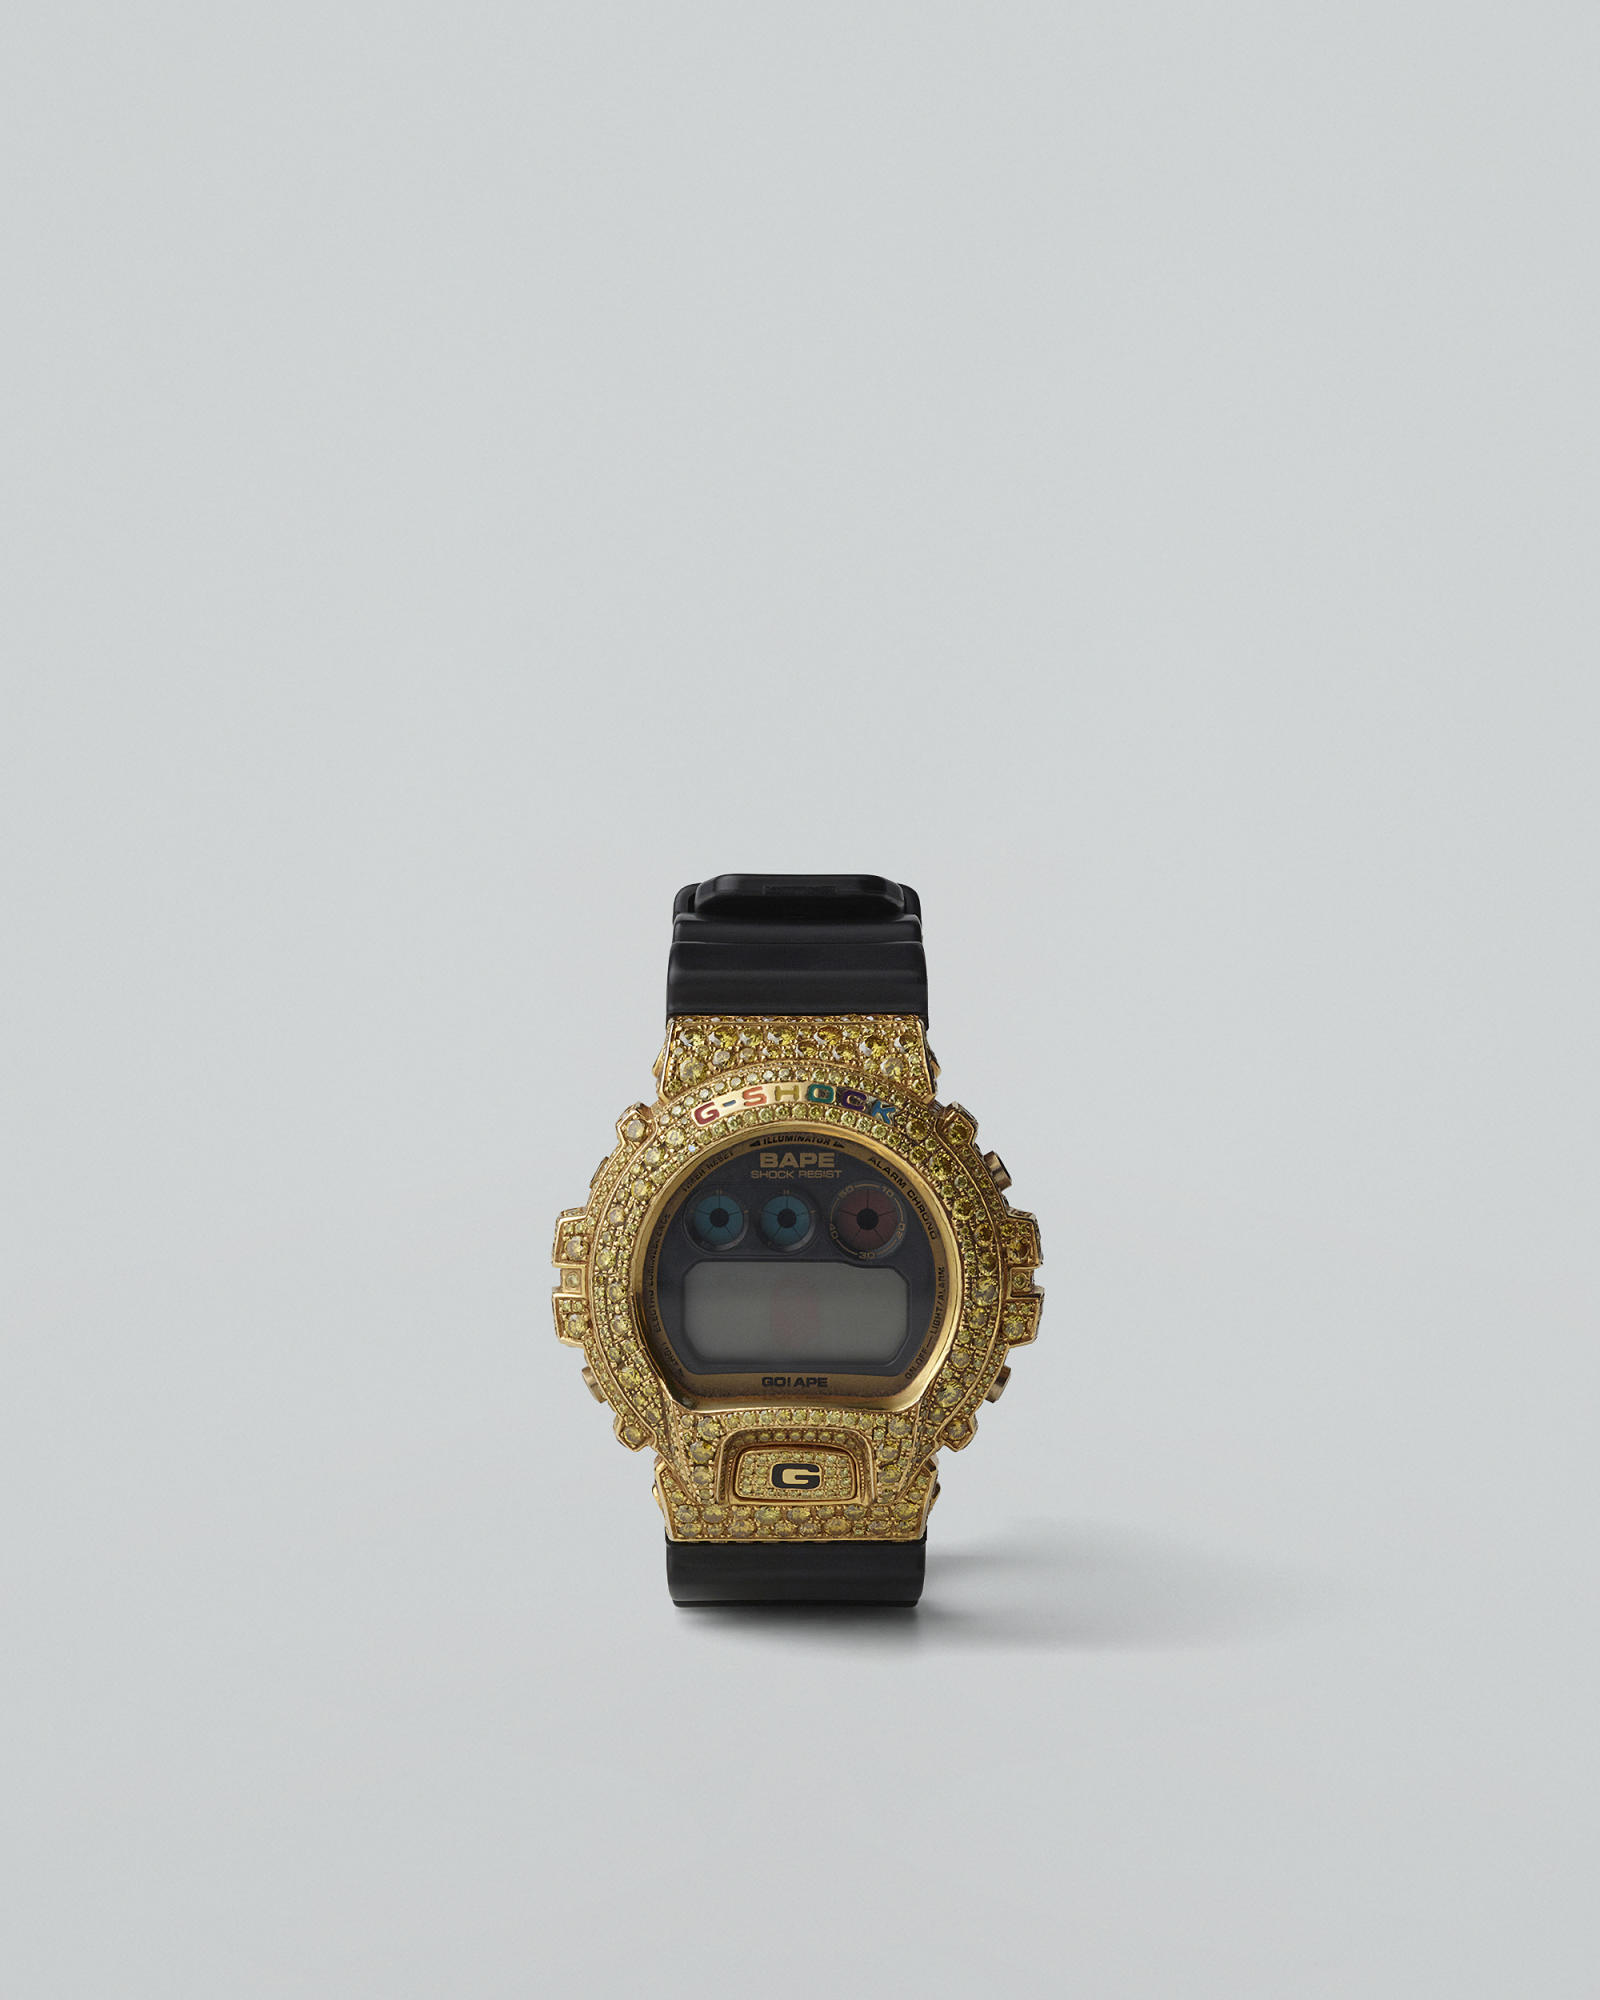 Casio-G-Shock-Bape-DW-6900-Yellow-Gold-and-Diamond-Unauthorized-1